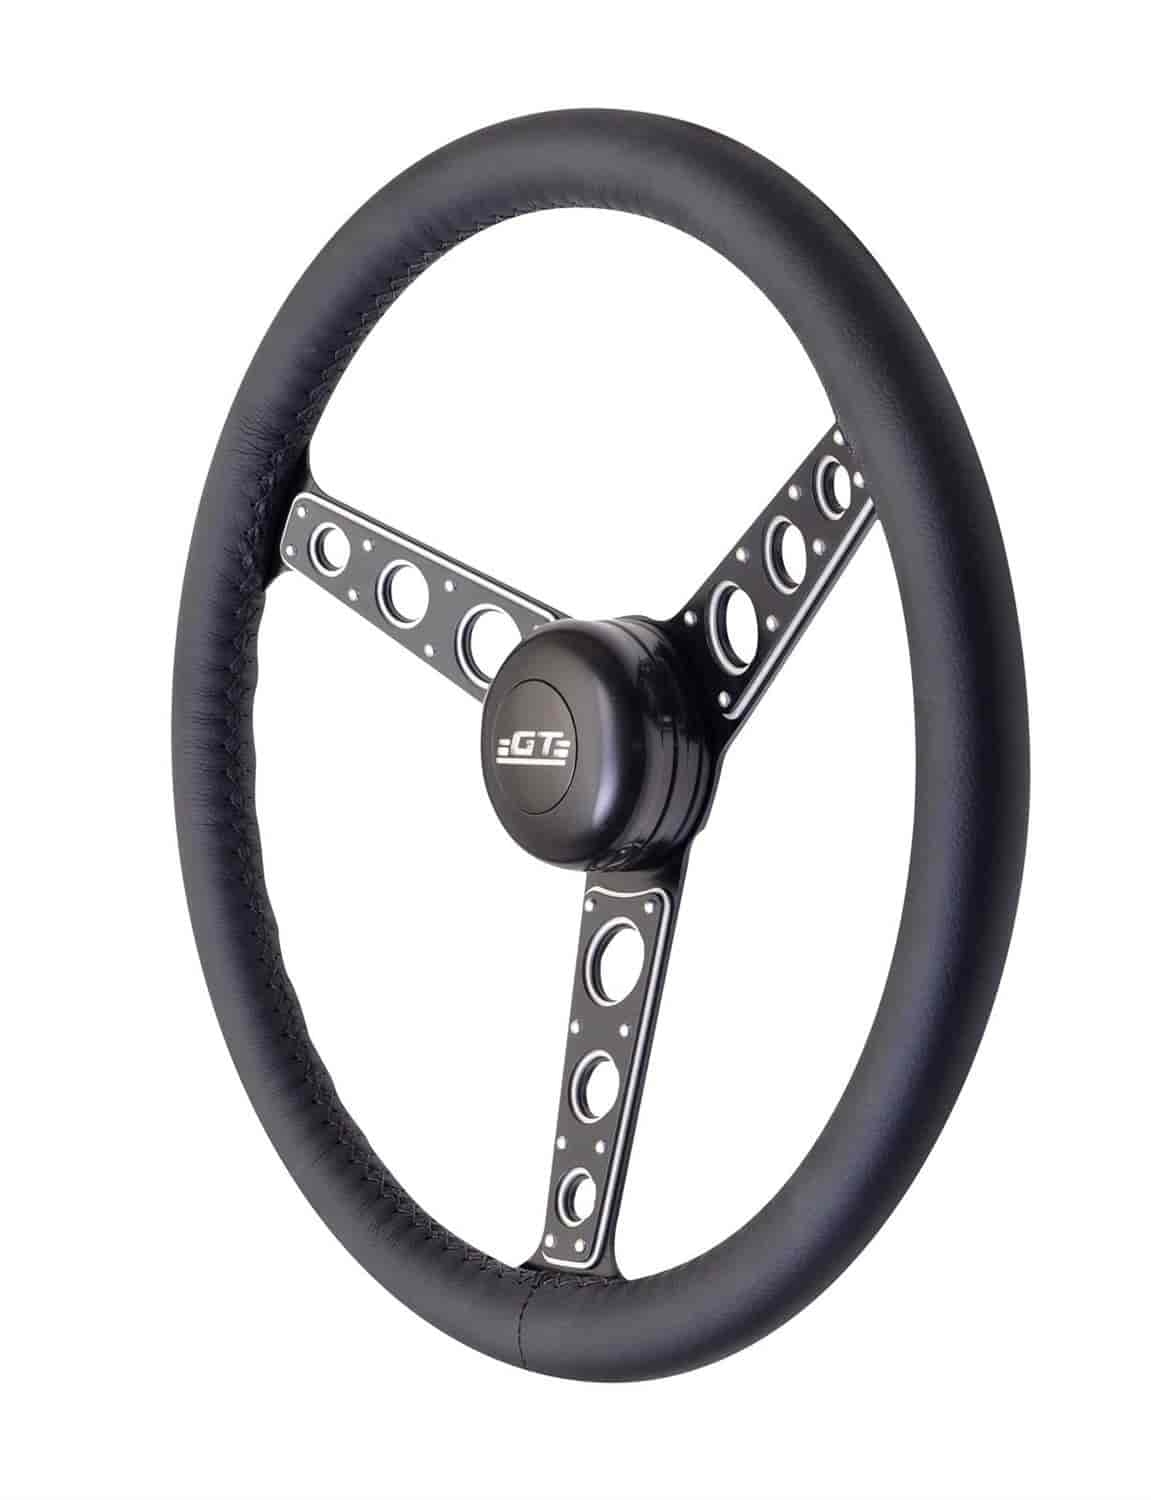 GT3 Pro Touring Steering Wheel Diameter: 15"